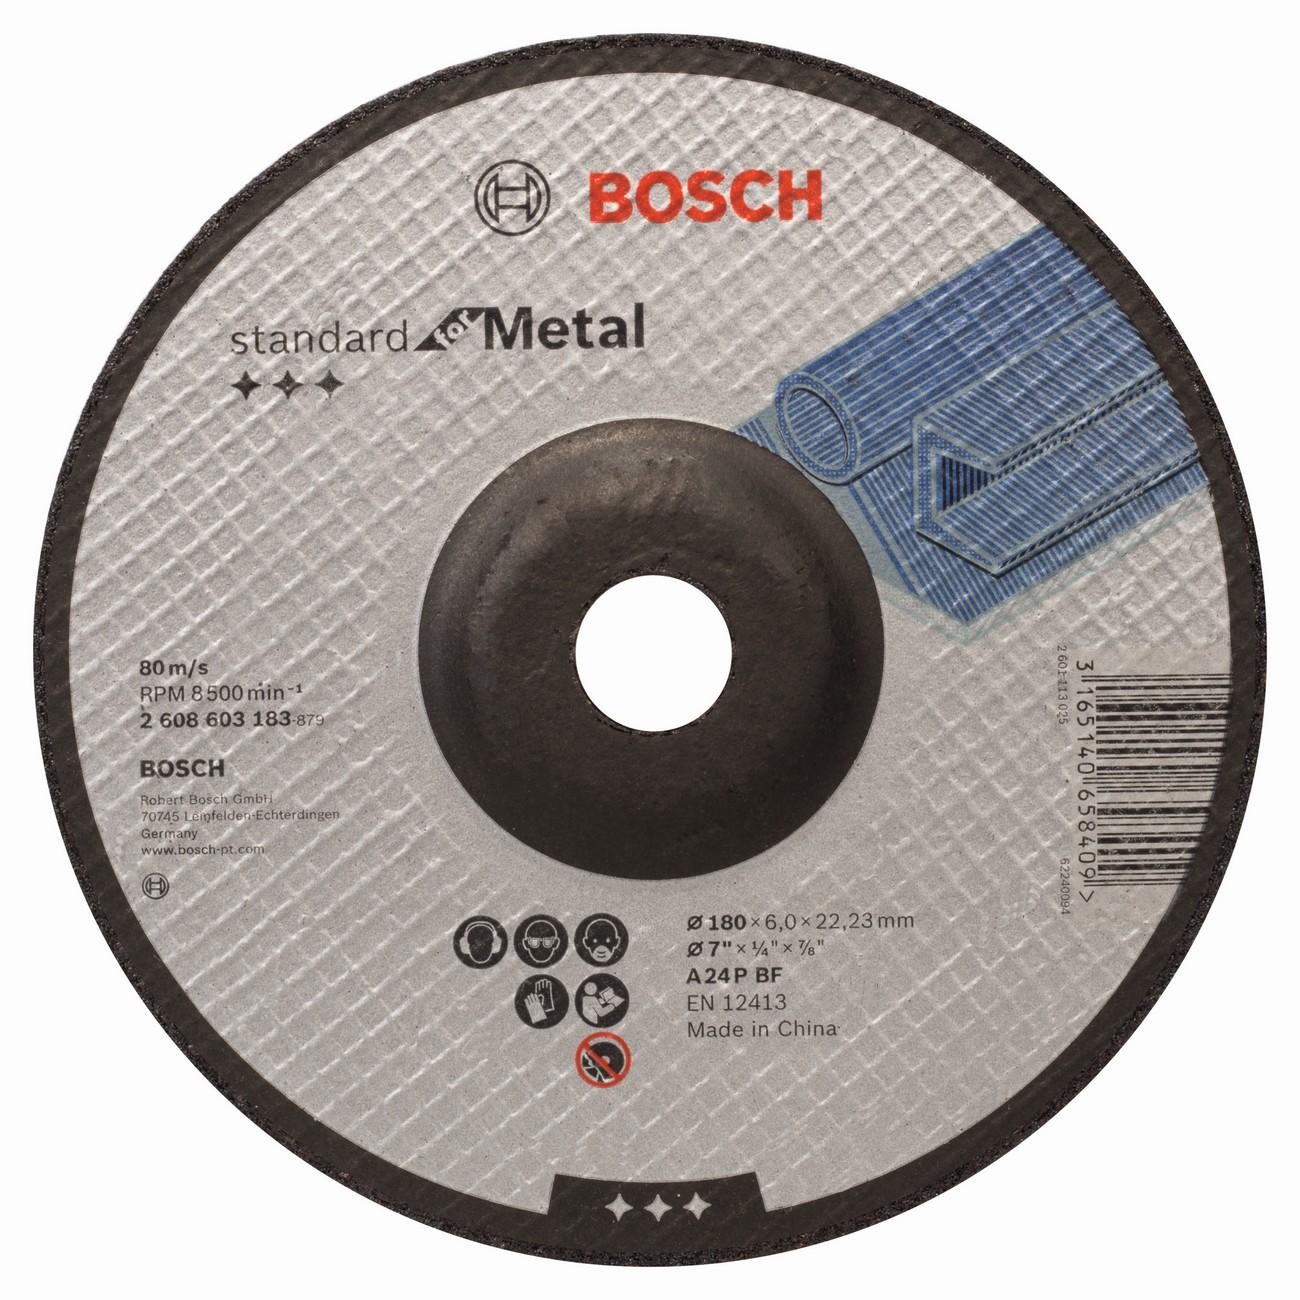 BOSCH Professional A 24 P BF Диск за грубо шлифоване вдлъбнат метал 180 мм 22.23 мм 6 мм (2608603183)